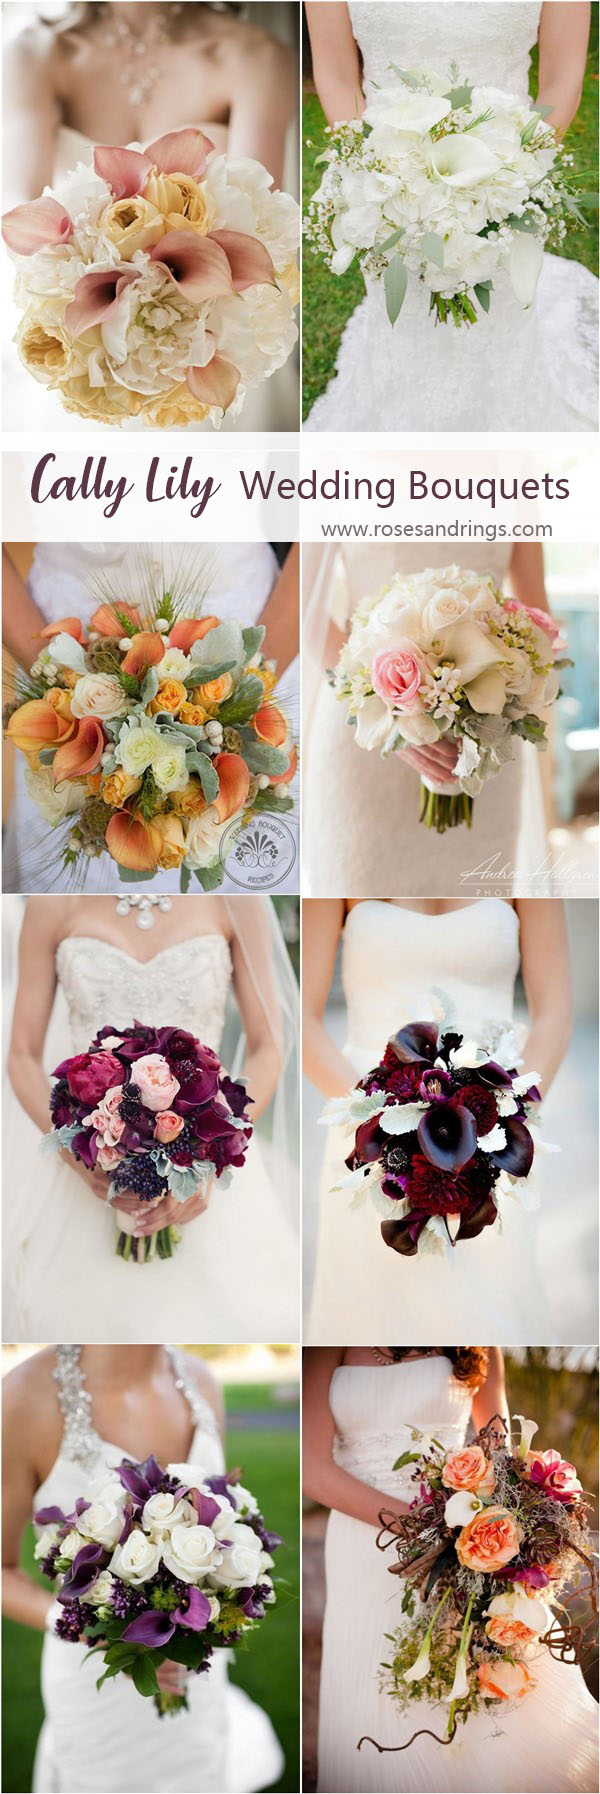 calla lily wedding bouquet ideas